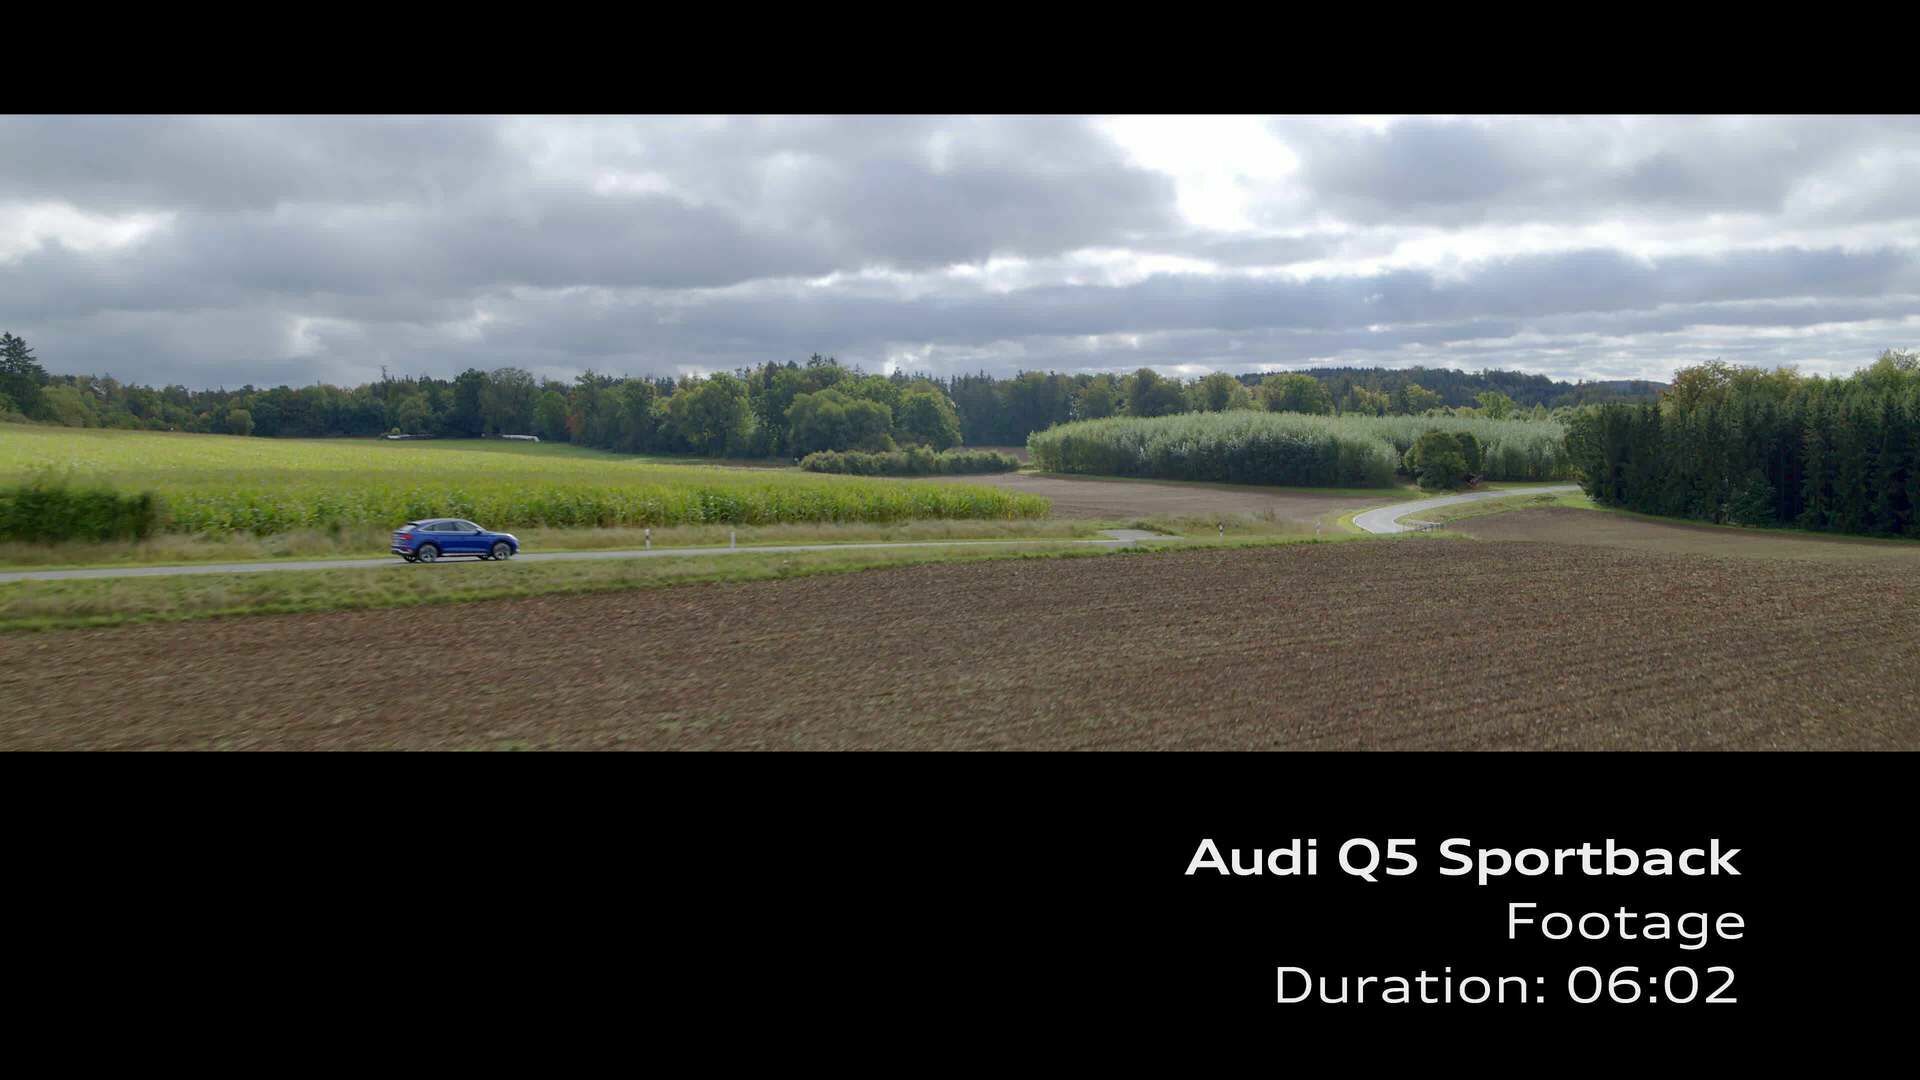 Footage: Audi Q5 Sportback Fahrszenen